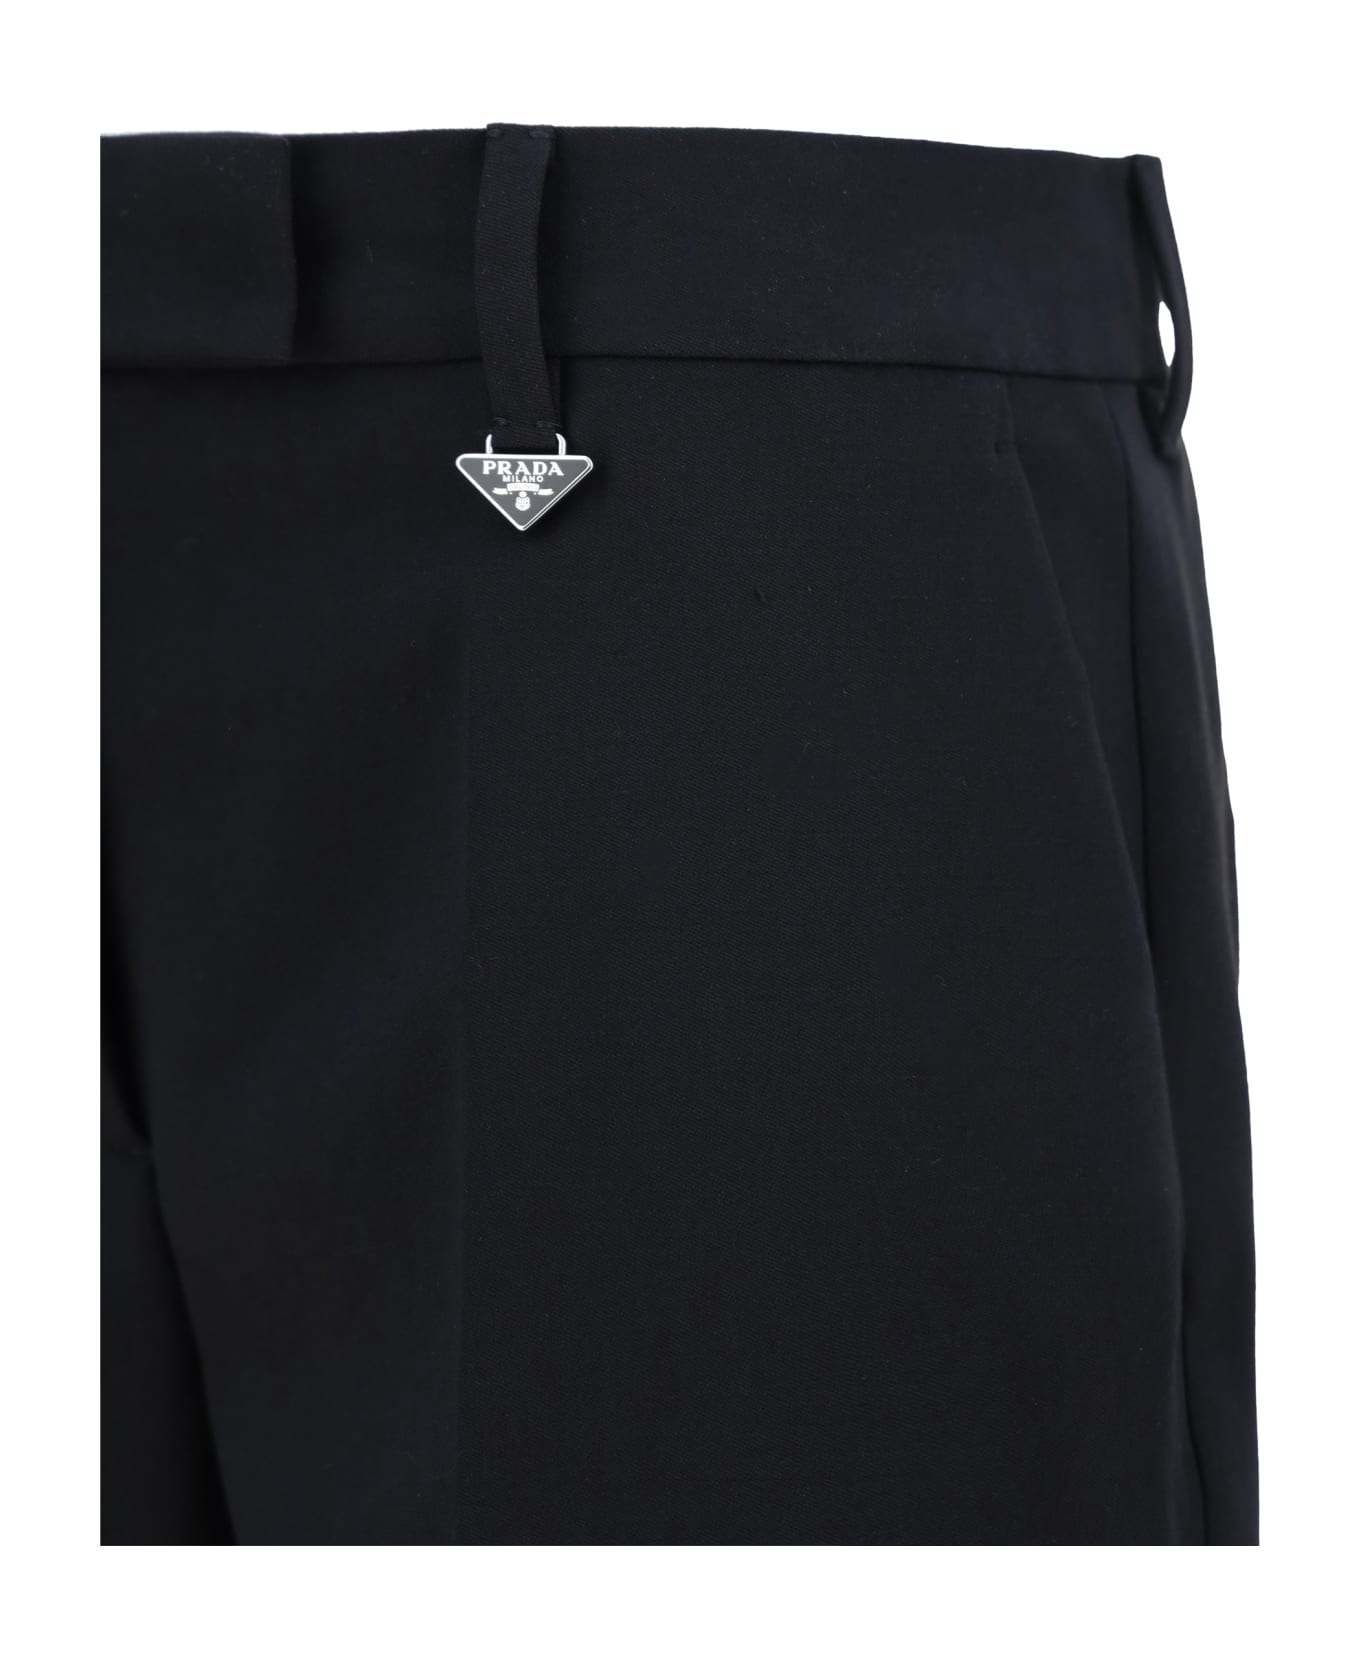 Prada Tailoring Pants - Black ボトムス